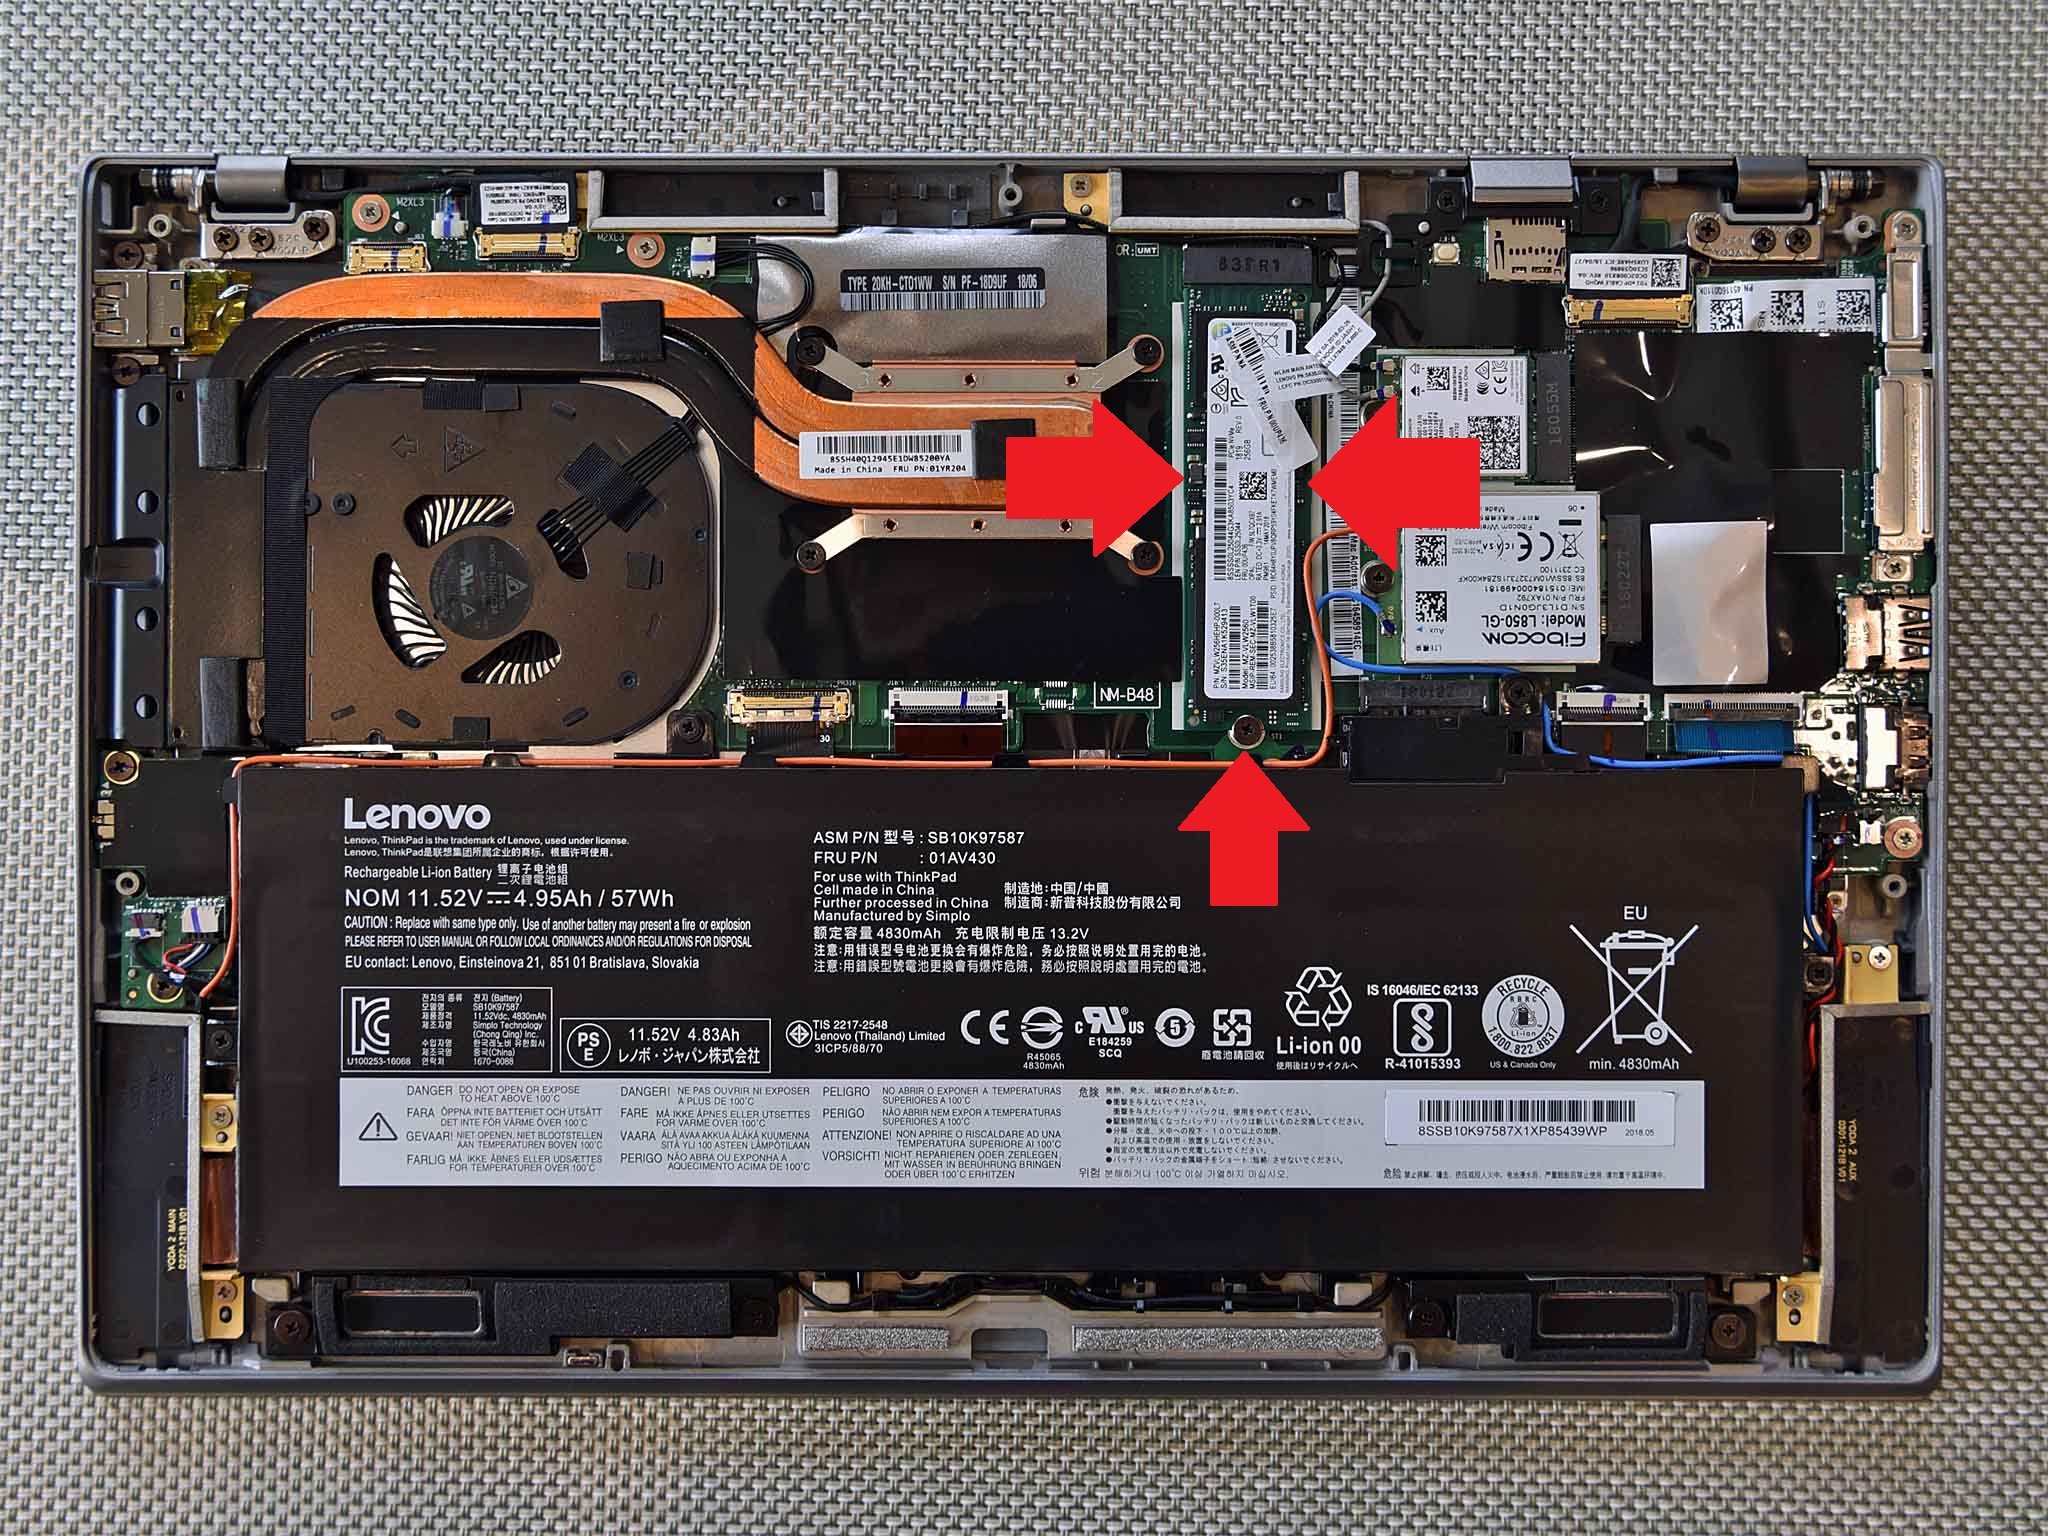 Gen 6 by CMS C67 128GB SSDNow M.2 SATA 6Gb Compatible with Lenovo ThinkPad X1 Carbon 